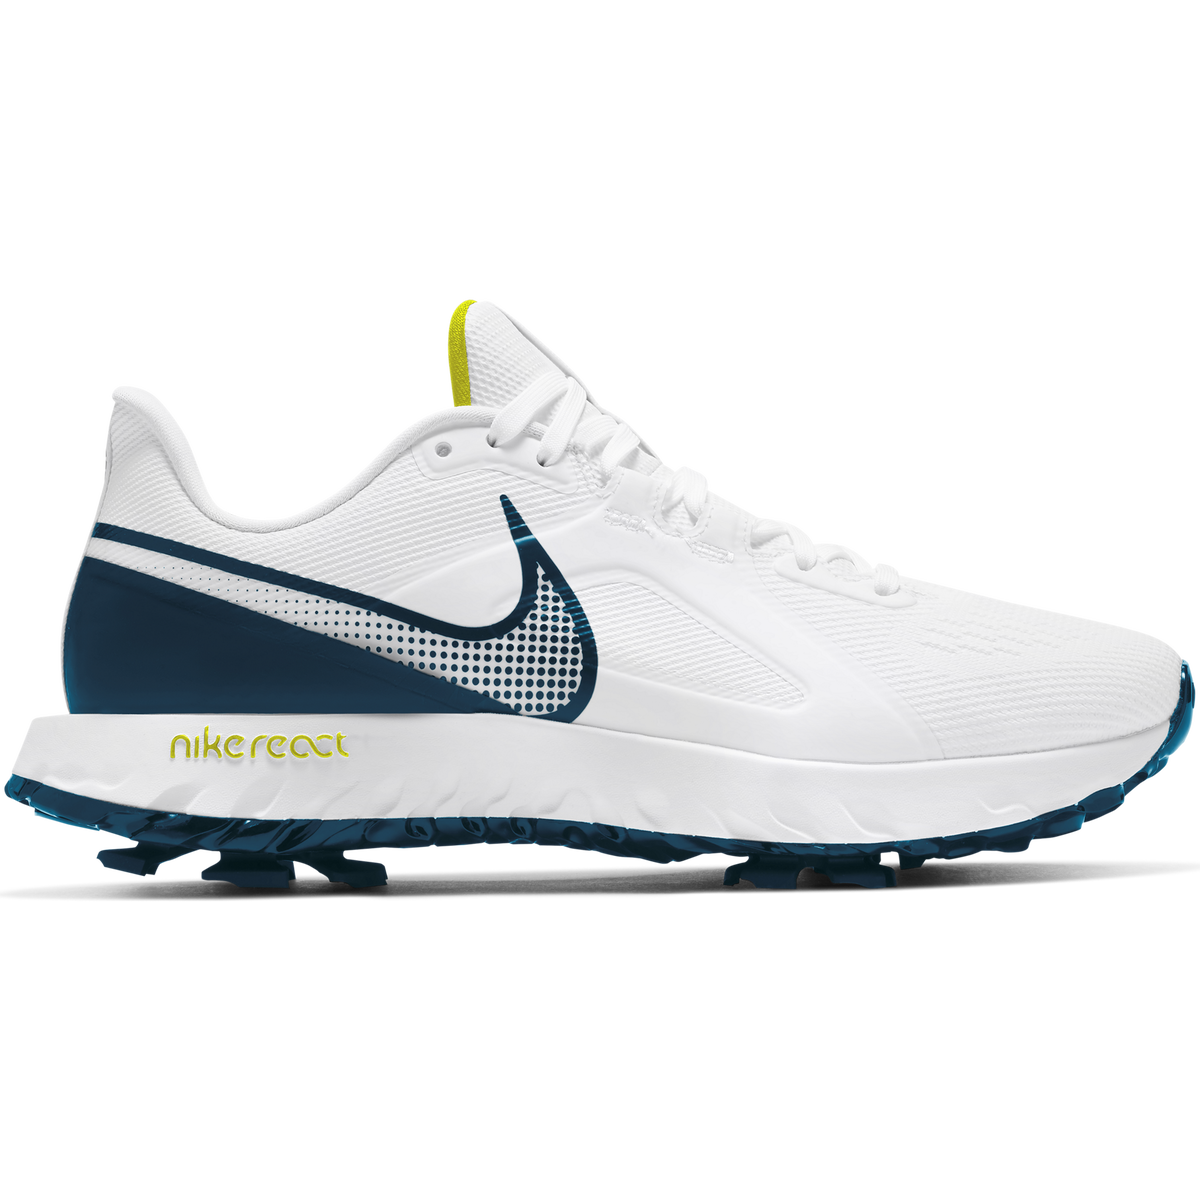 Nike React Infinity Pro Men's Golf Shoe - White/Blue | PGA TOUR Superstore